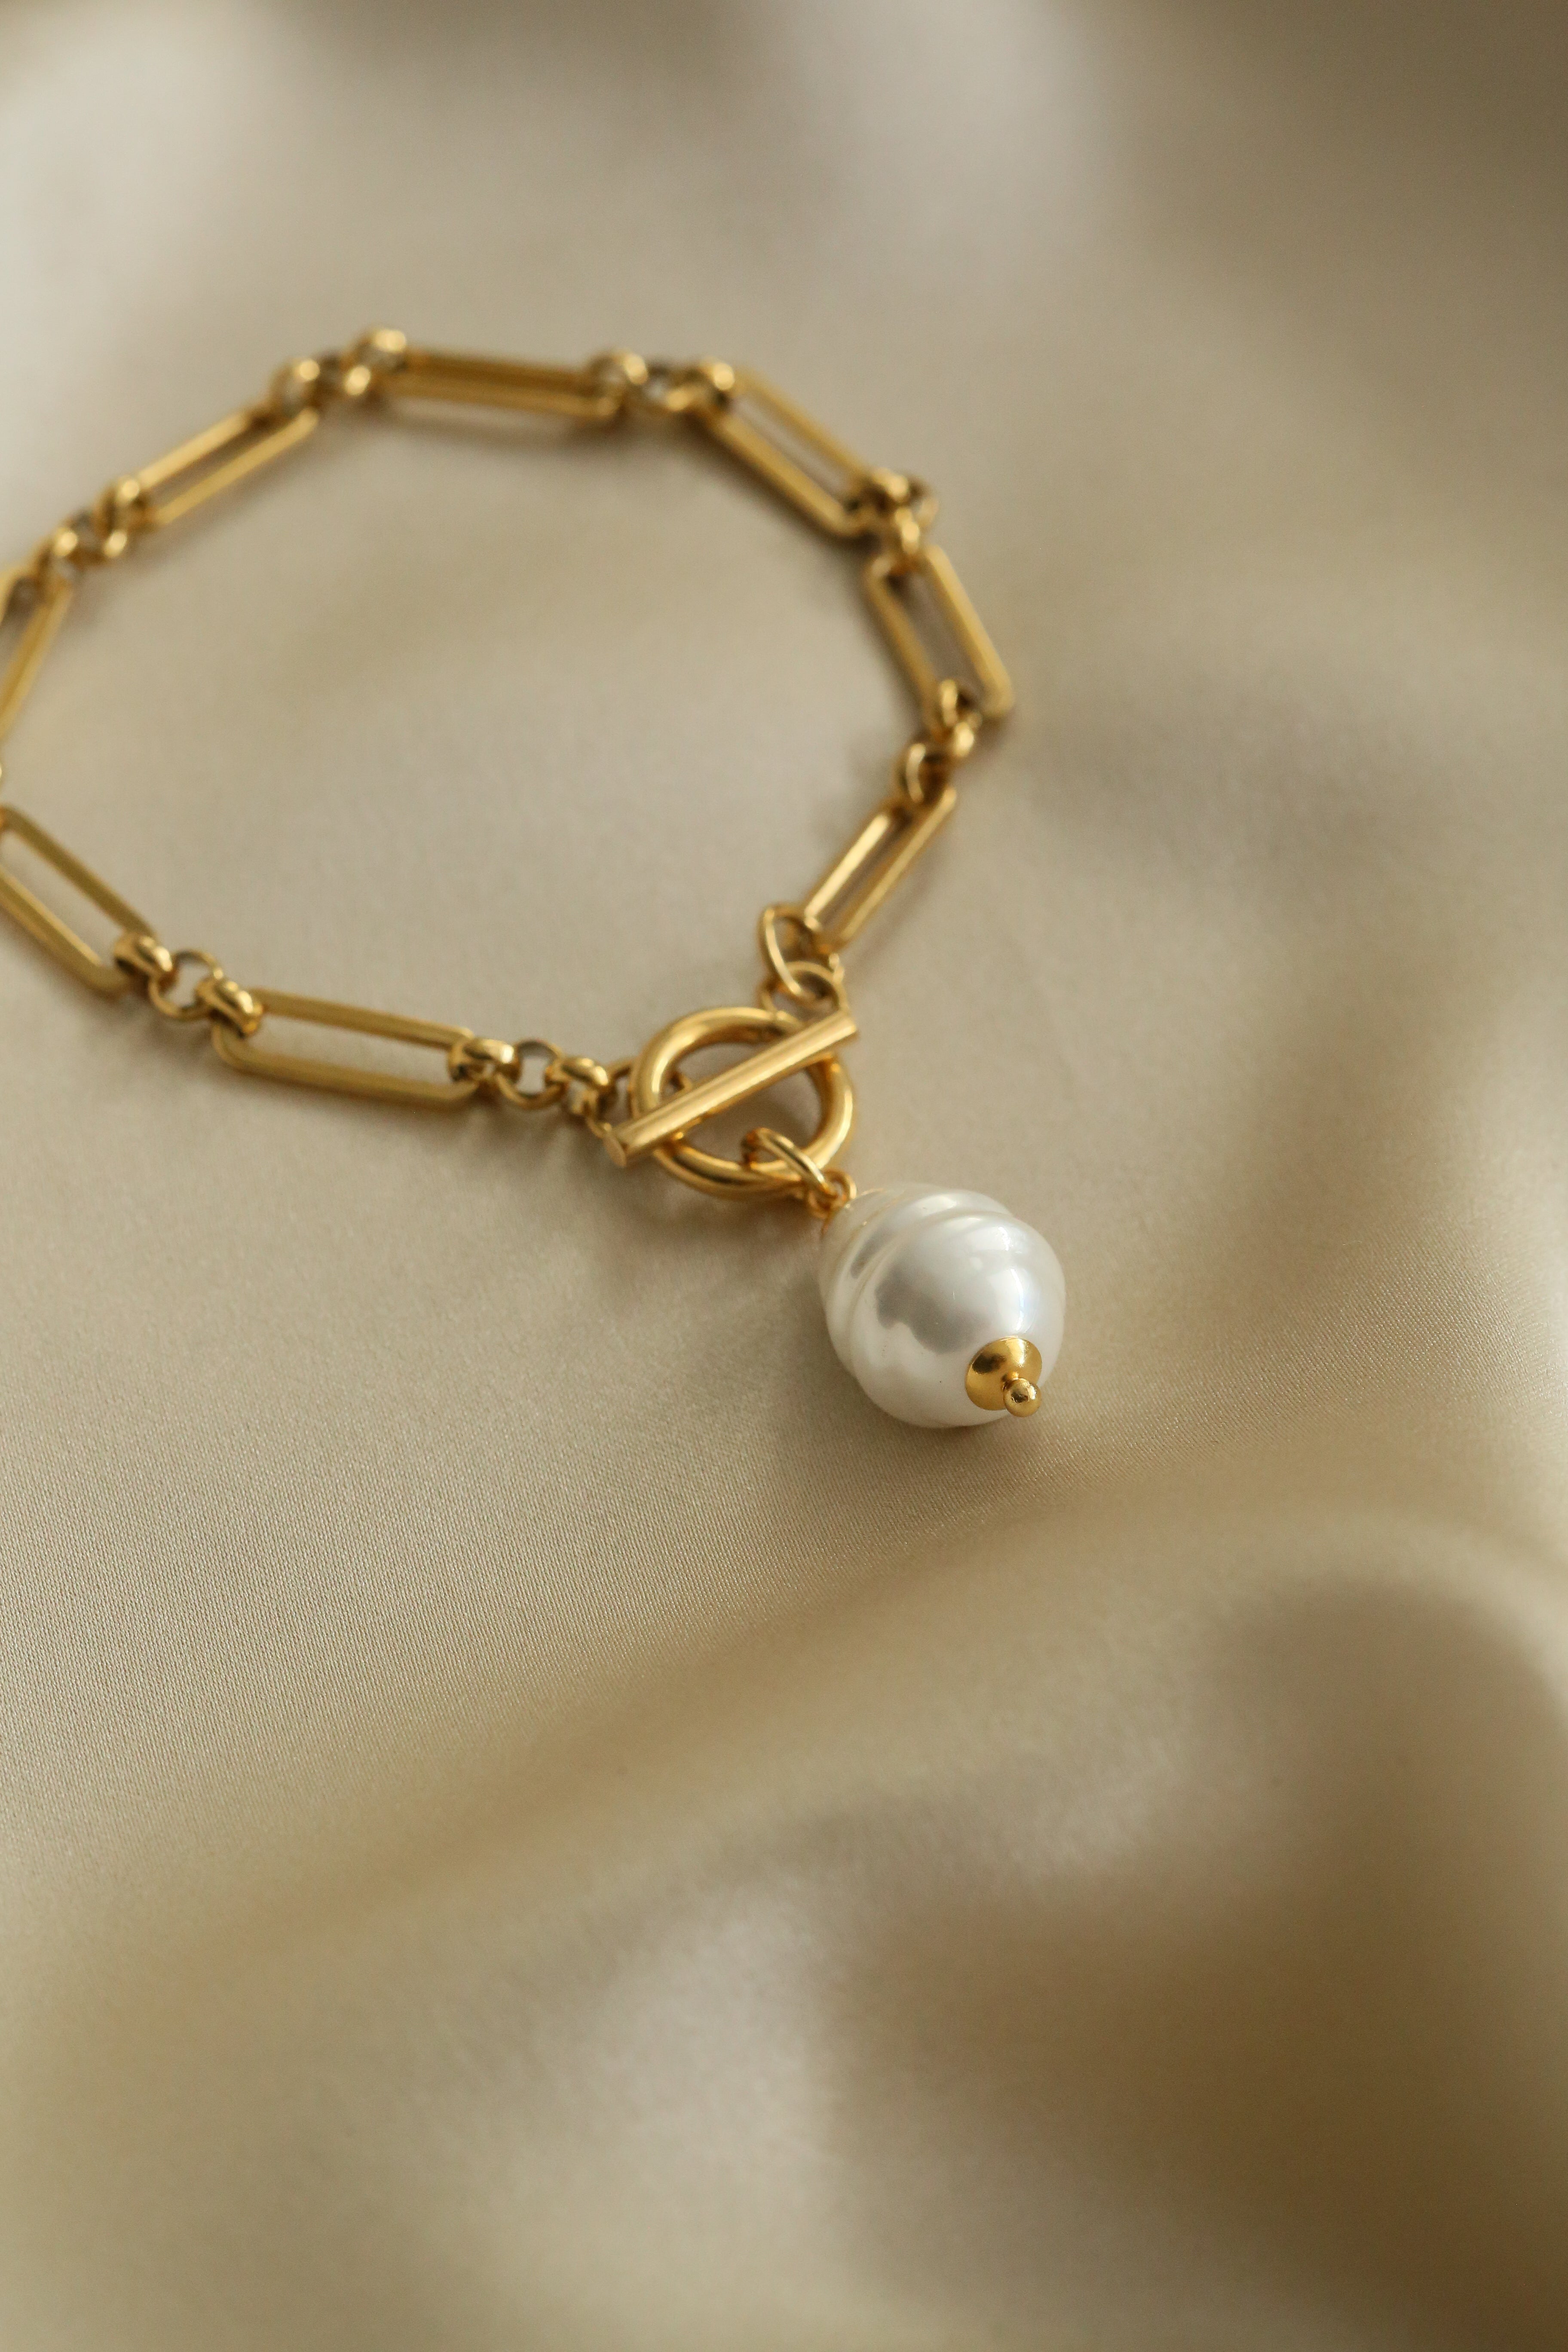 Isla Bracelet - Boutique Minimaliste has waterproof, durable, elegant and vintage inspired jewelry